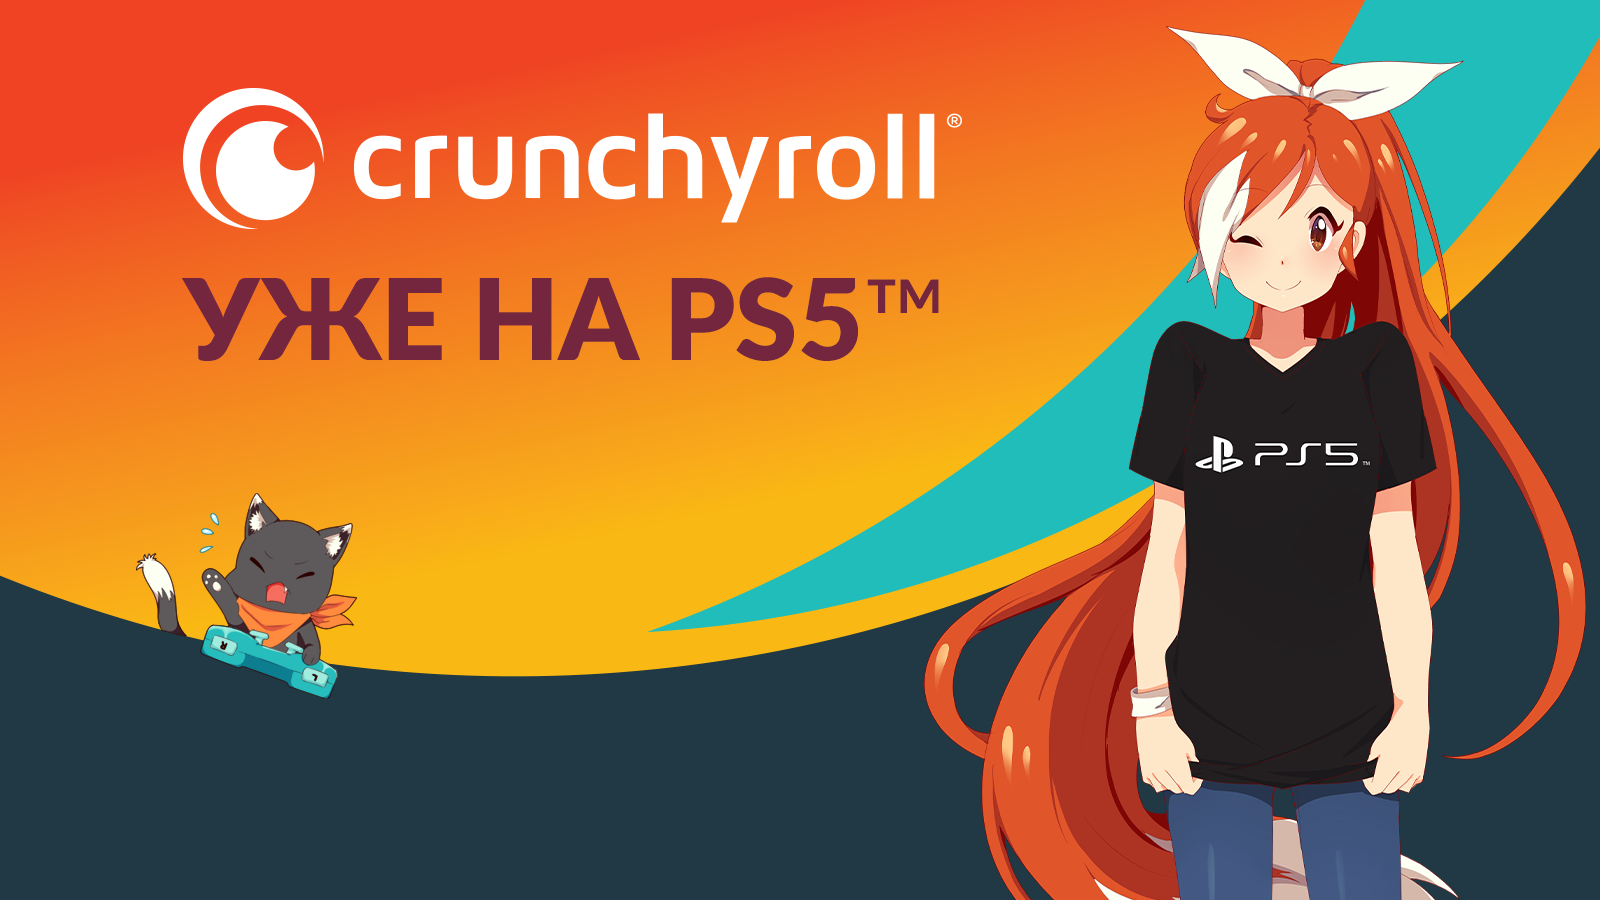 Crunchyroll is on PS5